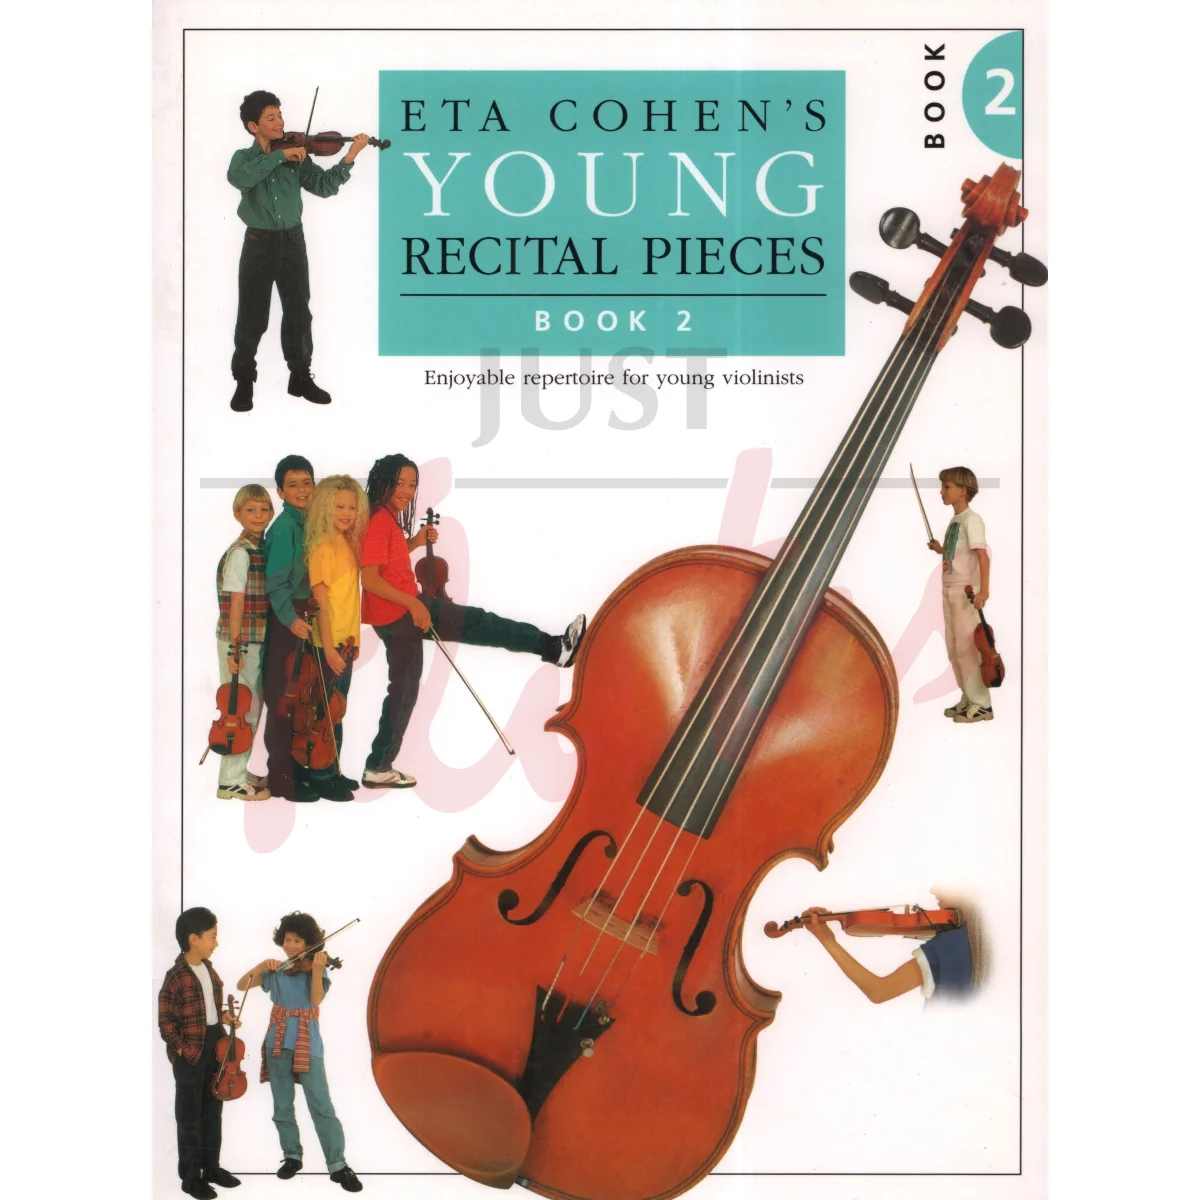 Young Recital Pieces for Violin Book 2